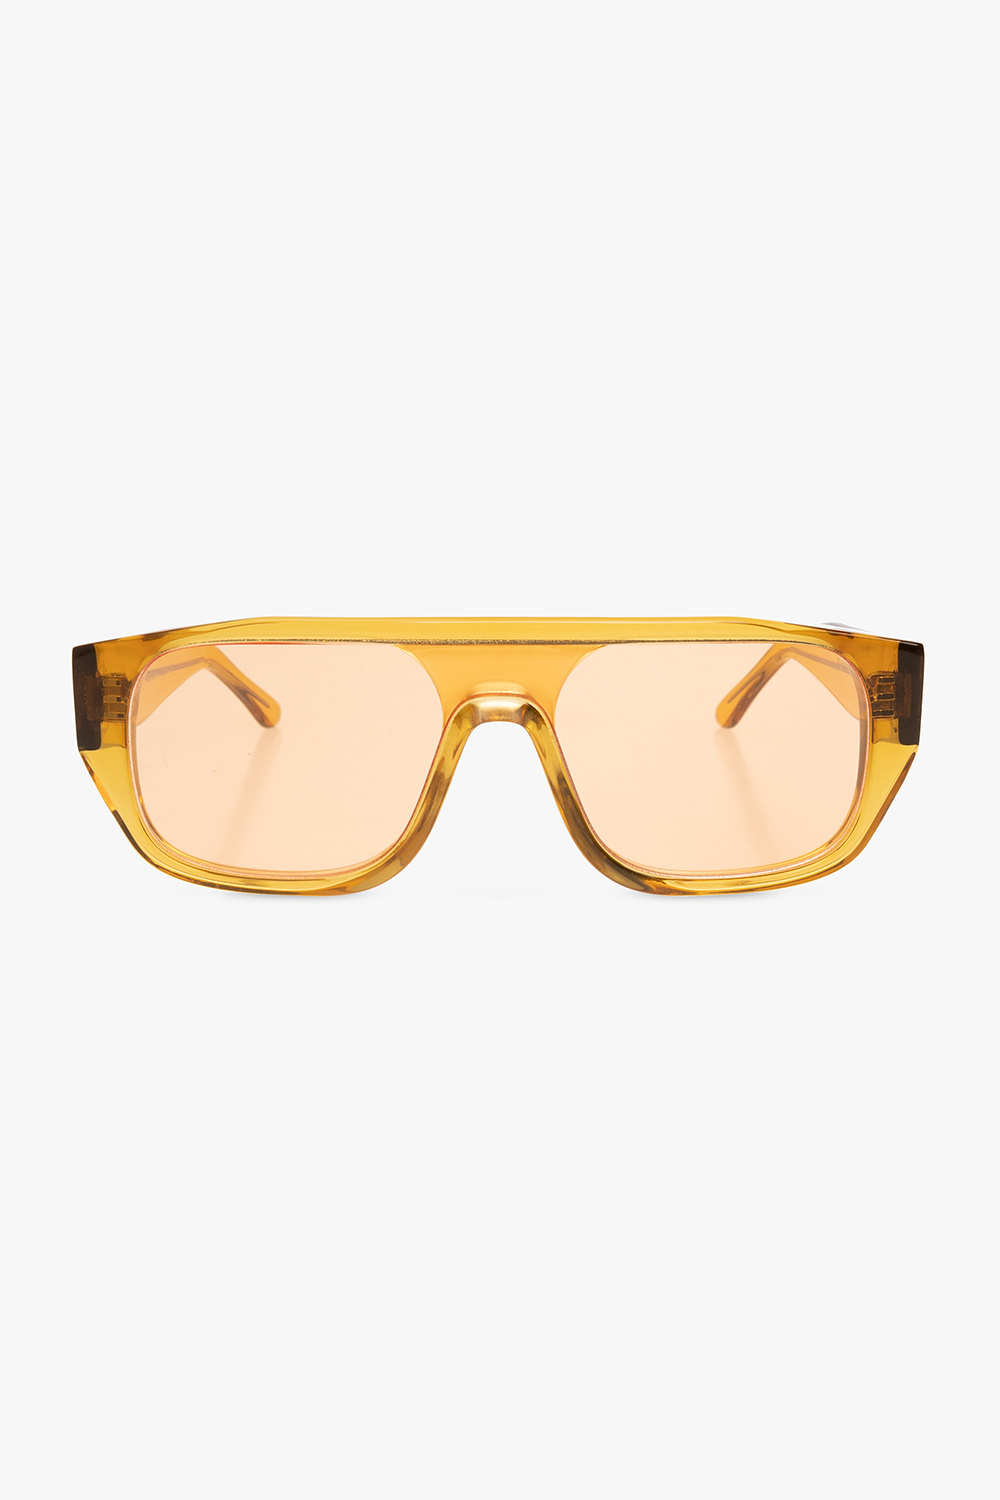 Yellow ‘Klassy’ sunglasses Thierry Lasry - Vitkac Germany